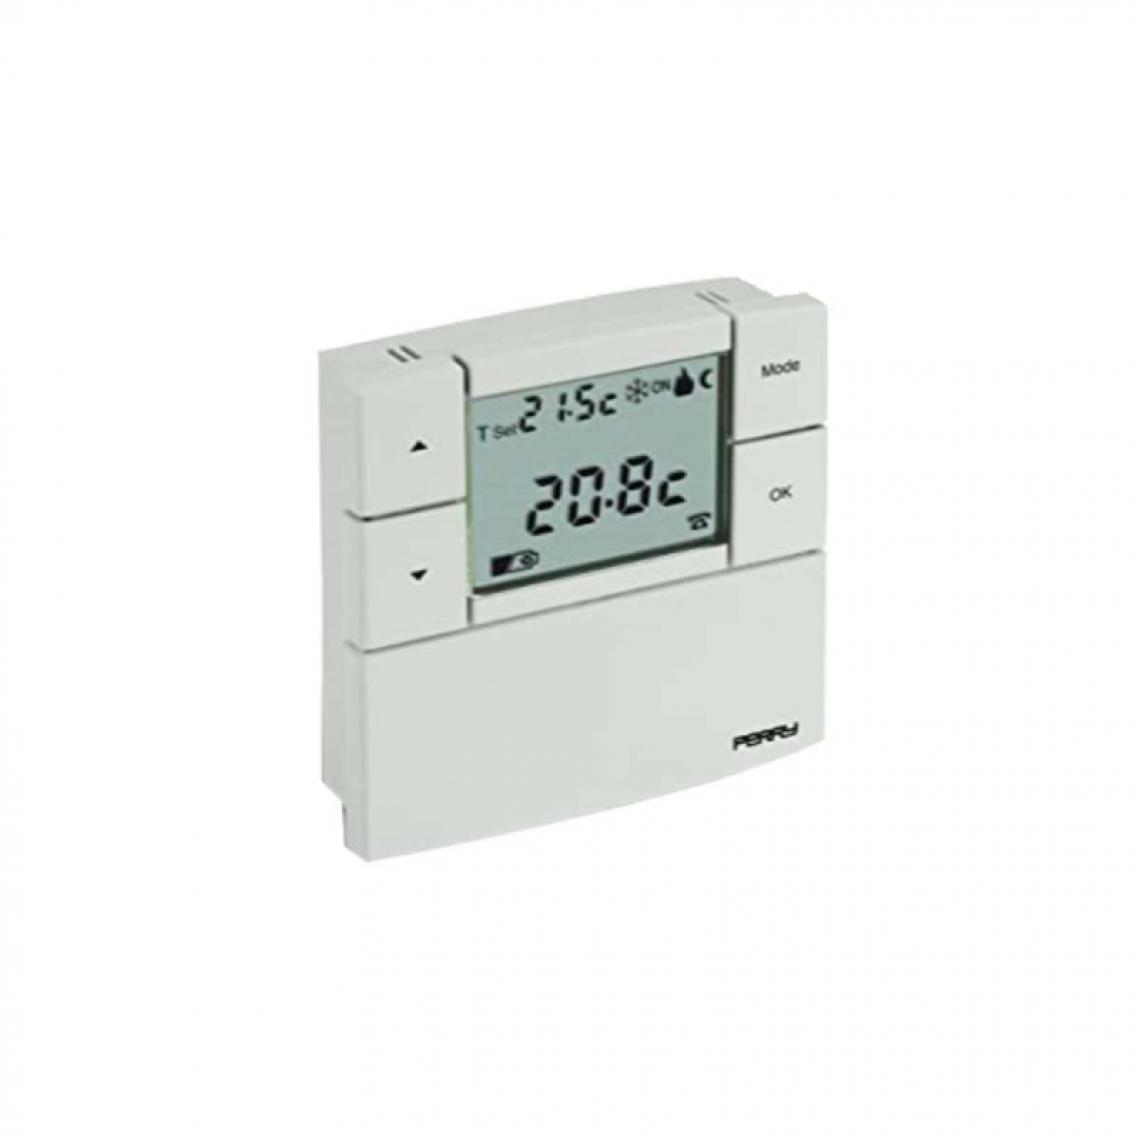 Divers Marques - Thermostat numérique PERRY - 03014 - Accessoires barbecue